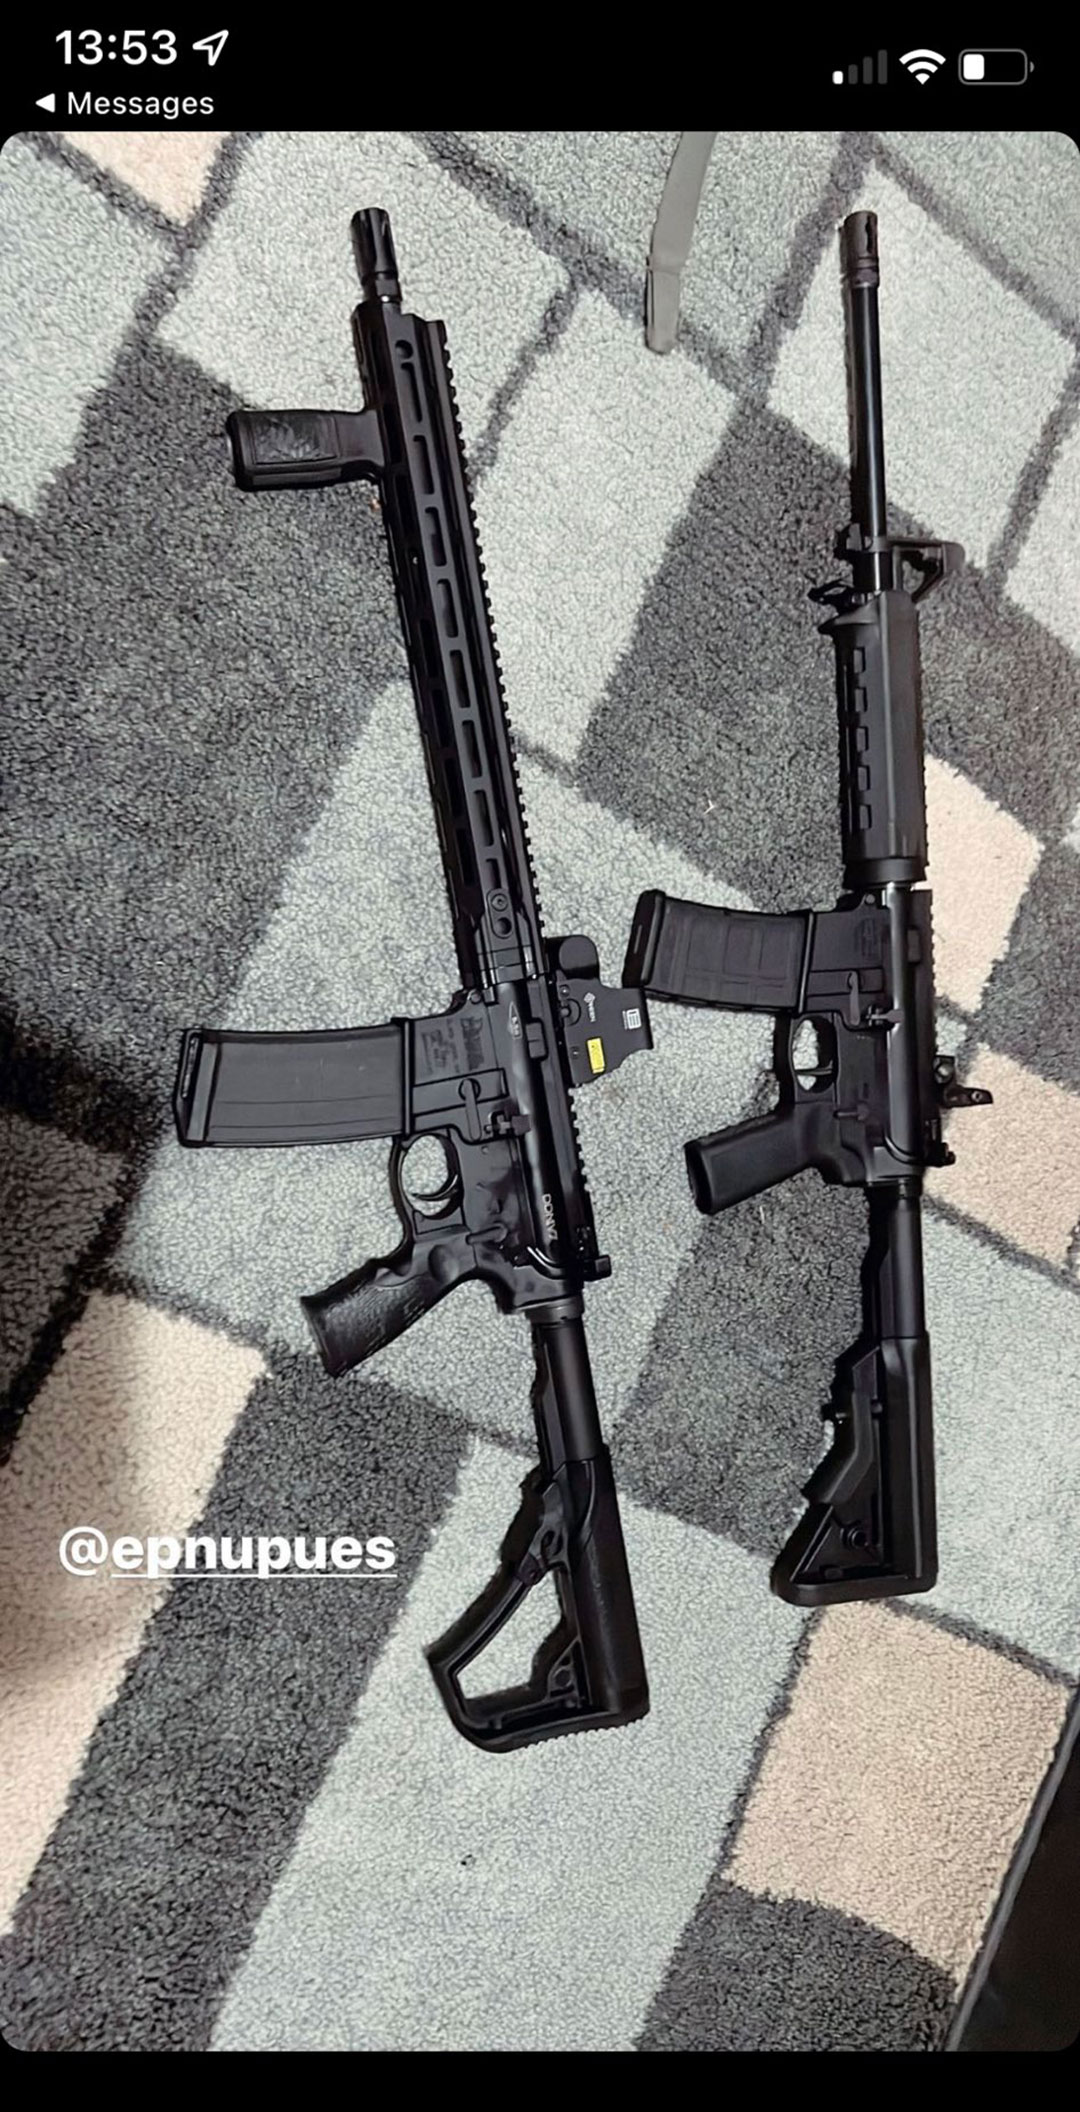 Armi pubblicate da Salvador Ramos sui social network